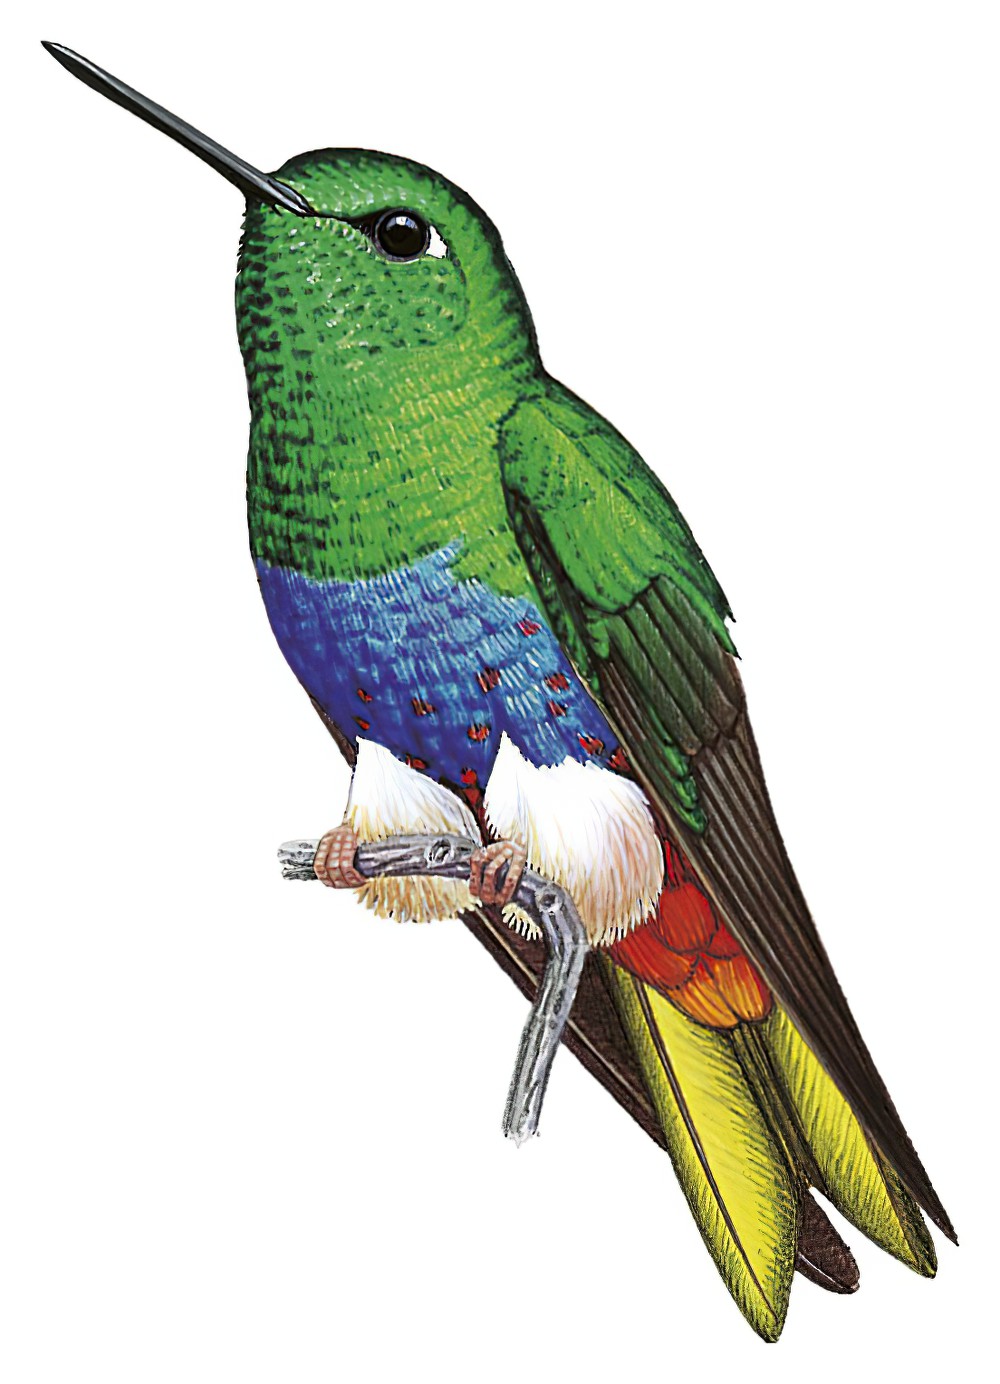 彩毛腿蜂鸟 / Colorful Puffleg / Eriocnemis mirabilis